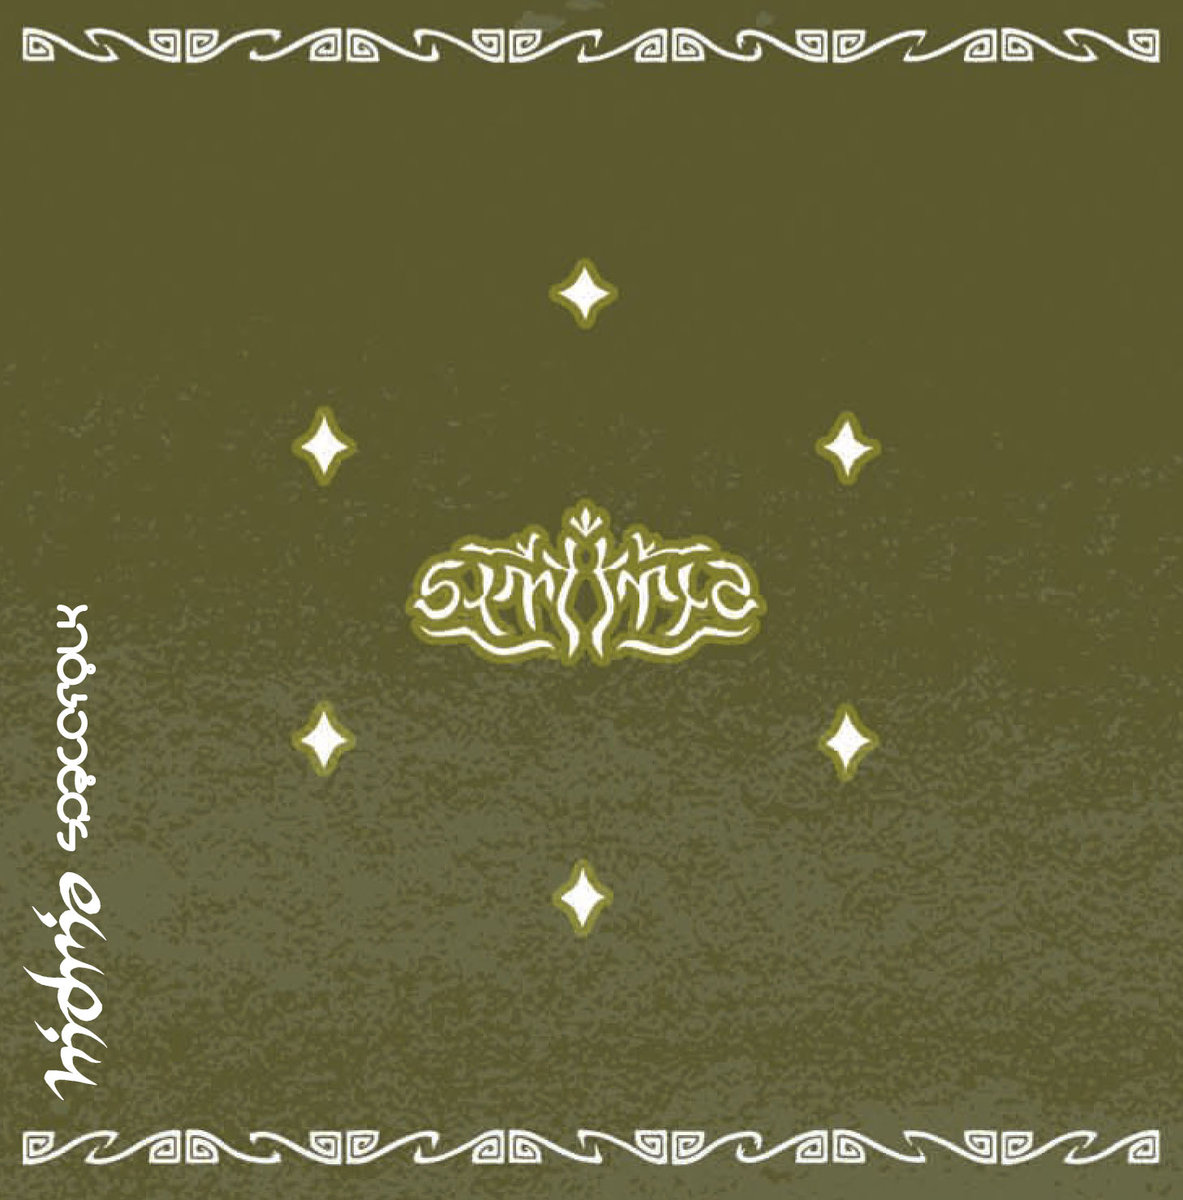 Hidria Spacefolk - Futur Ixiom @ 'Symetria' album (alternative, astrobeat)